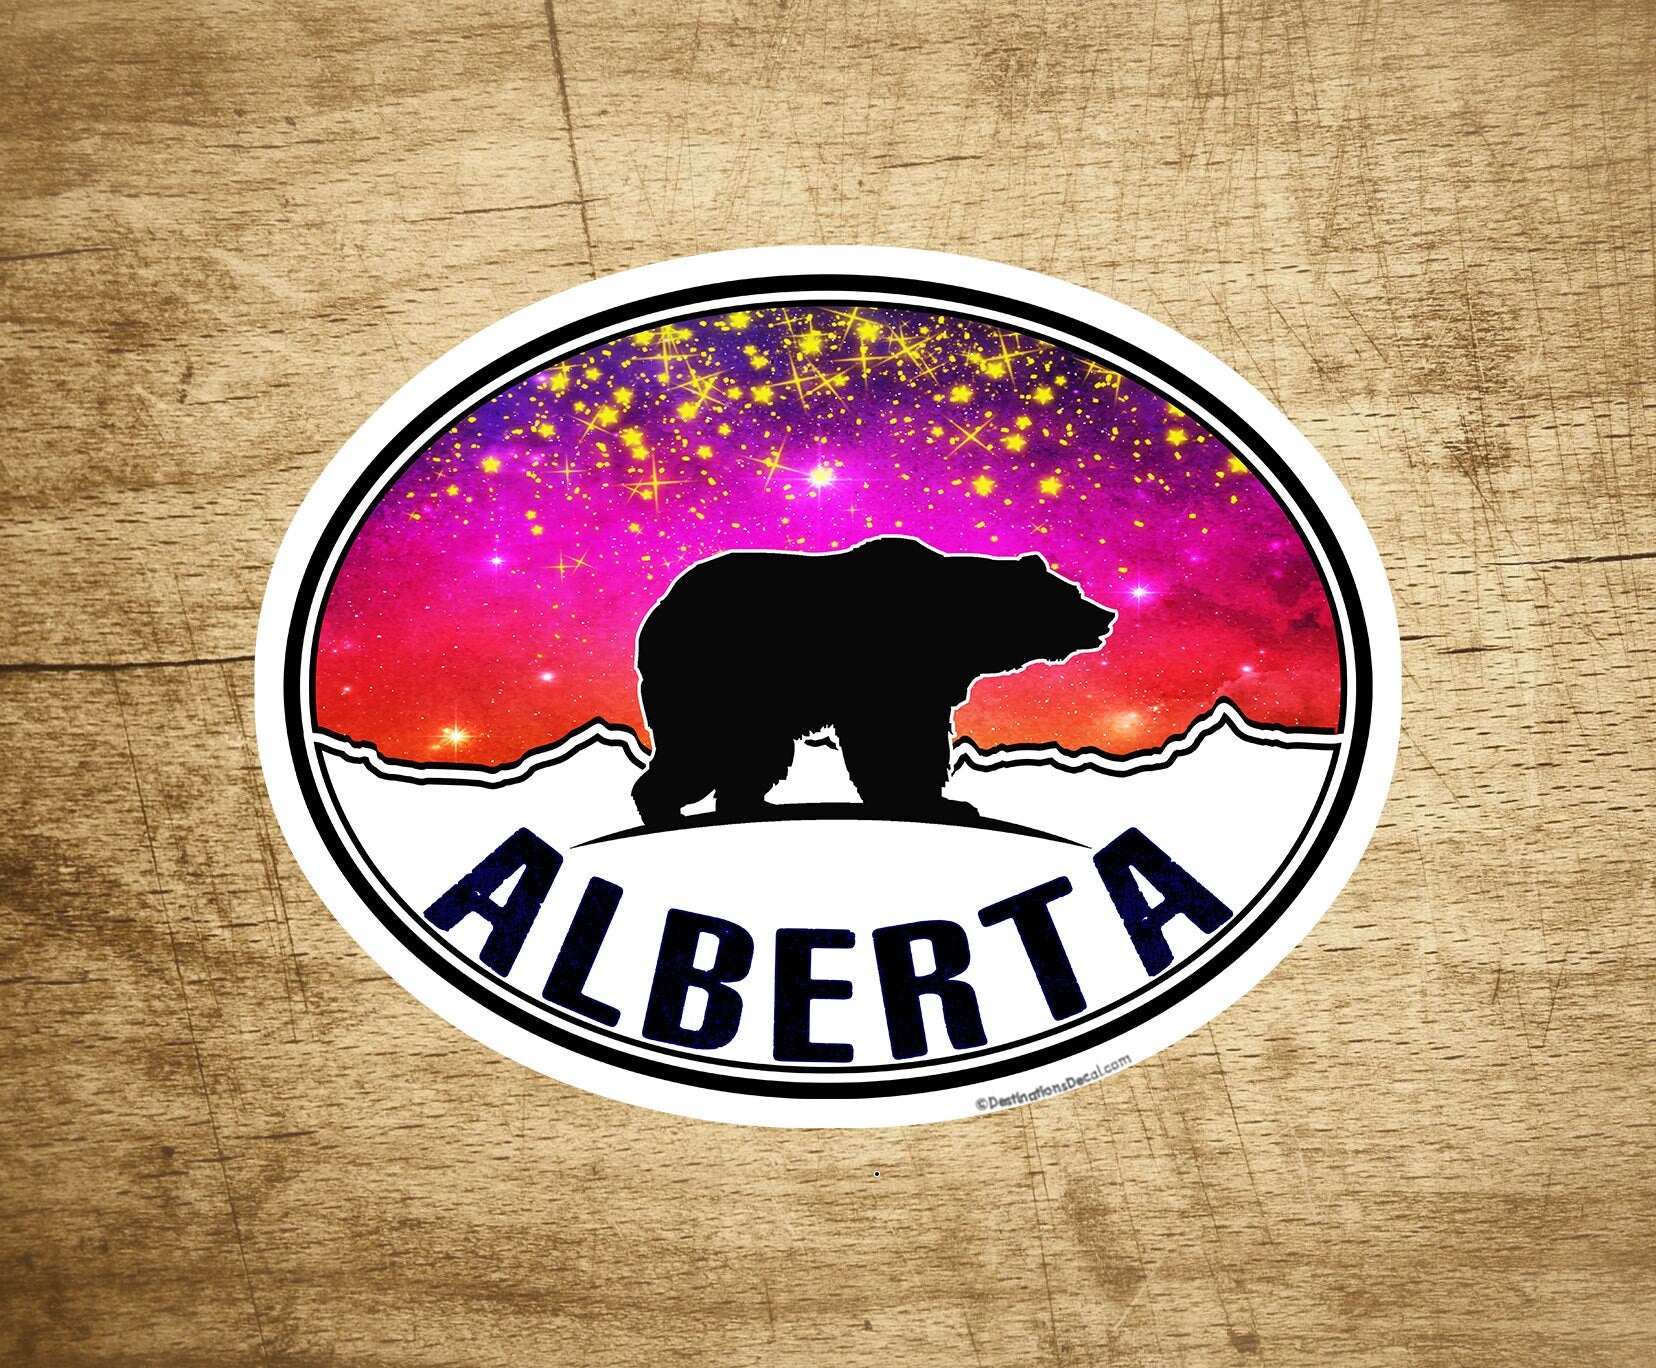 Alberta Northern Lights Travel Decal 3 5/8" x 2 7/8" Sticker Canada Banff